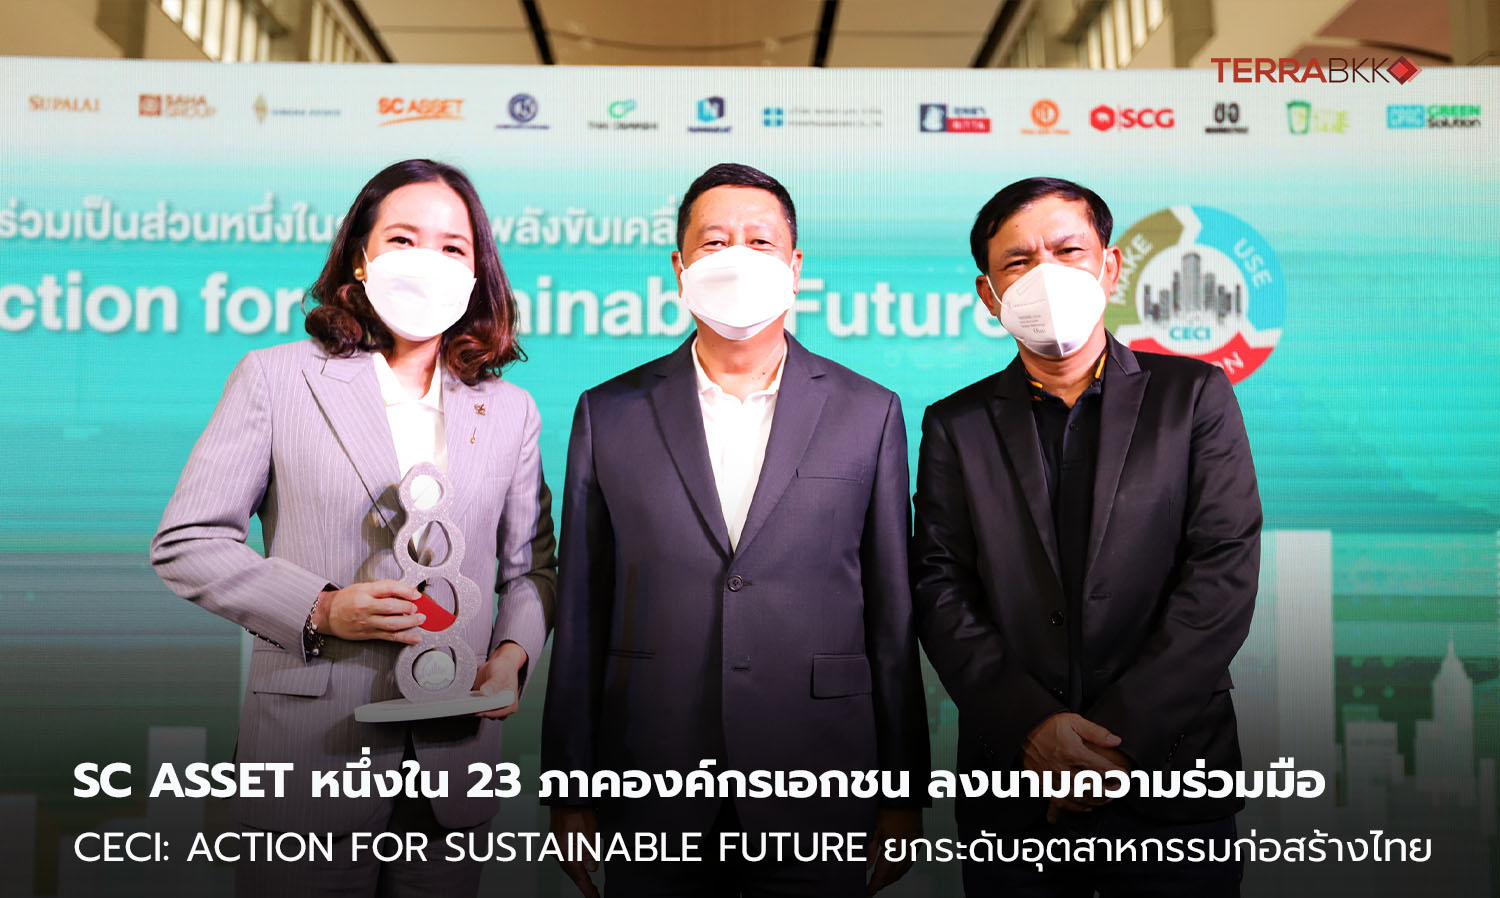 sc-asset-หนึ่งใน-23-ภาคองค์กรเอกชน-ลงนามความร่วมมือ-ceci-action-for-sustainable-future-เพื่อบรรลุเป้าหมายในการยกระดับอุตสาหกรรมก่อสร้างไทย-ด้วยหลักเศรษฐกิจหมุนเวียนอย่างเป็นรูปธรรม-ดันอุตสาหกรรมก่อสร้างไทยเติบโตยั่งยืน